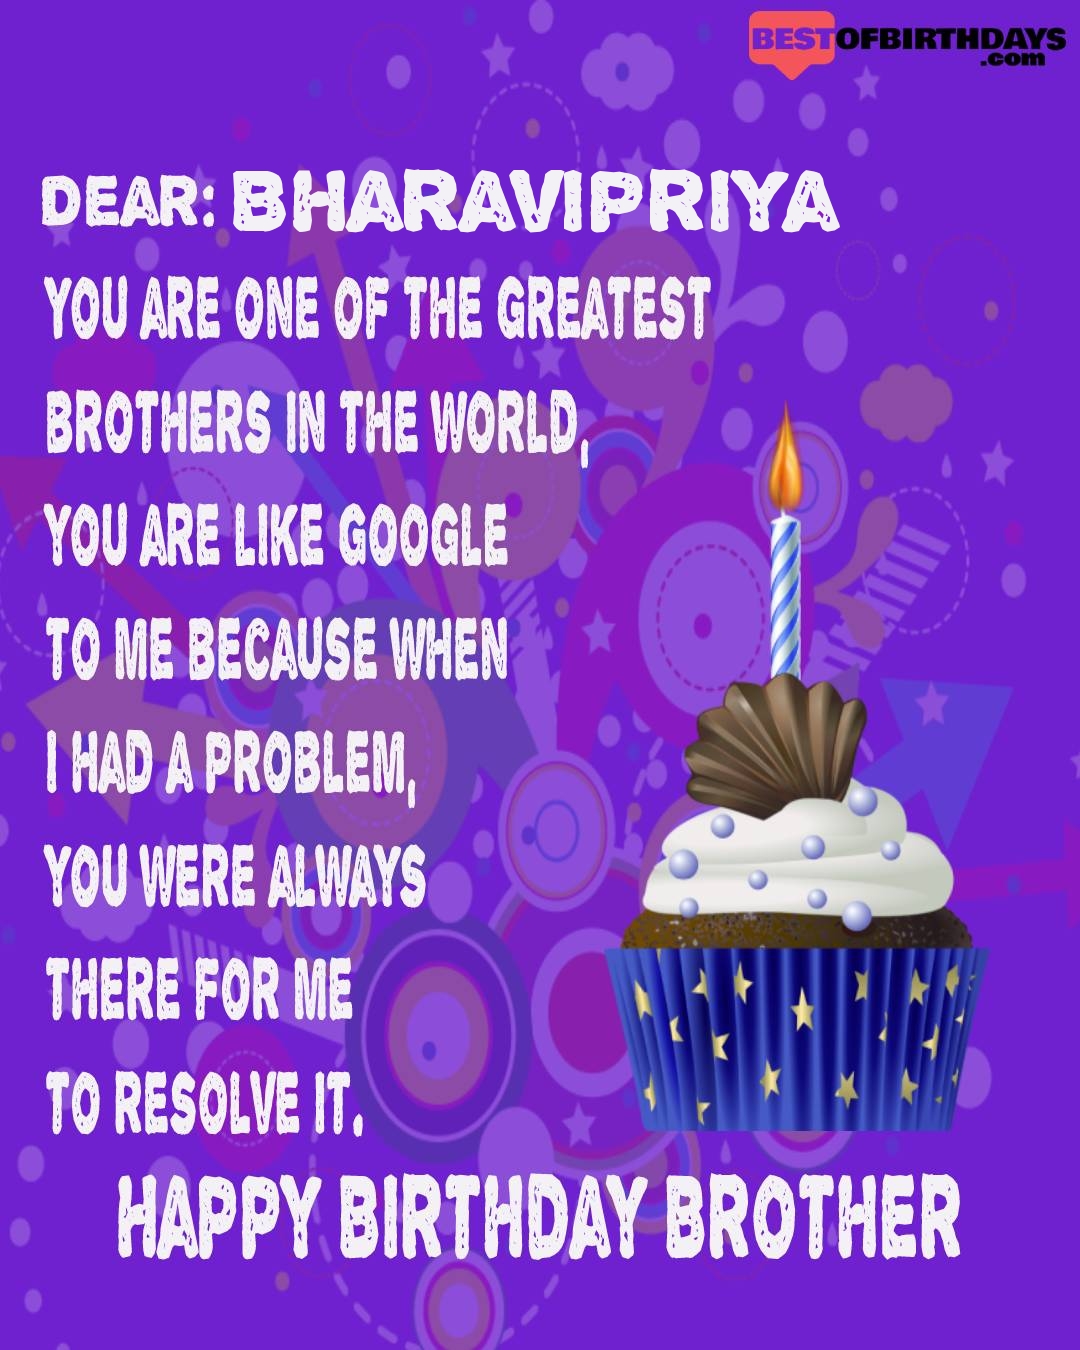 Happy birthday bharavipriya bhai brother bro